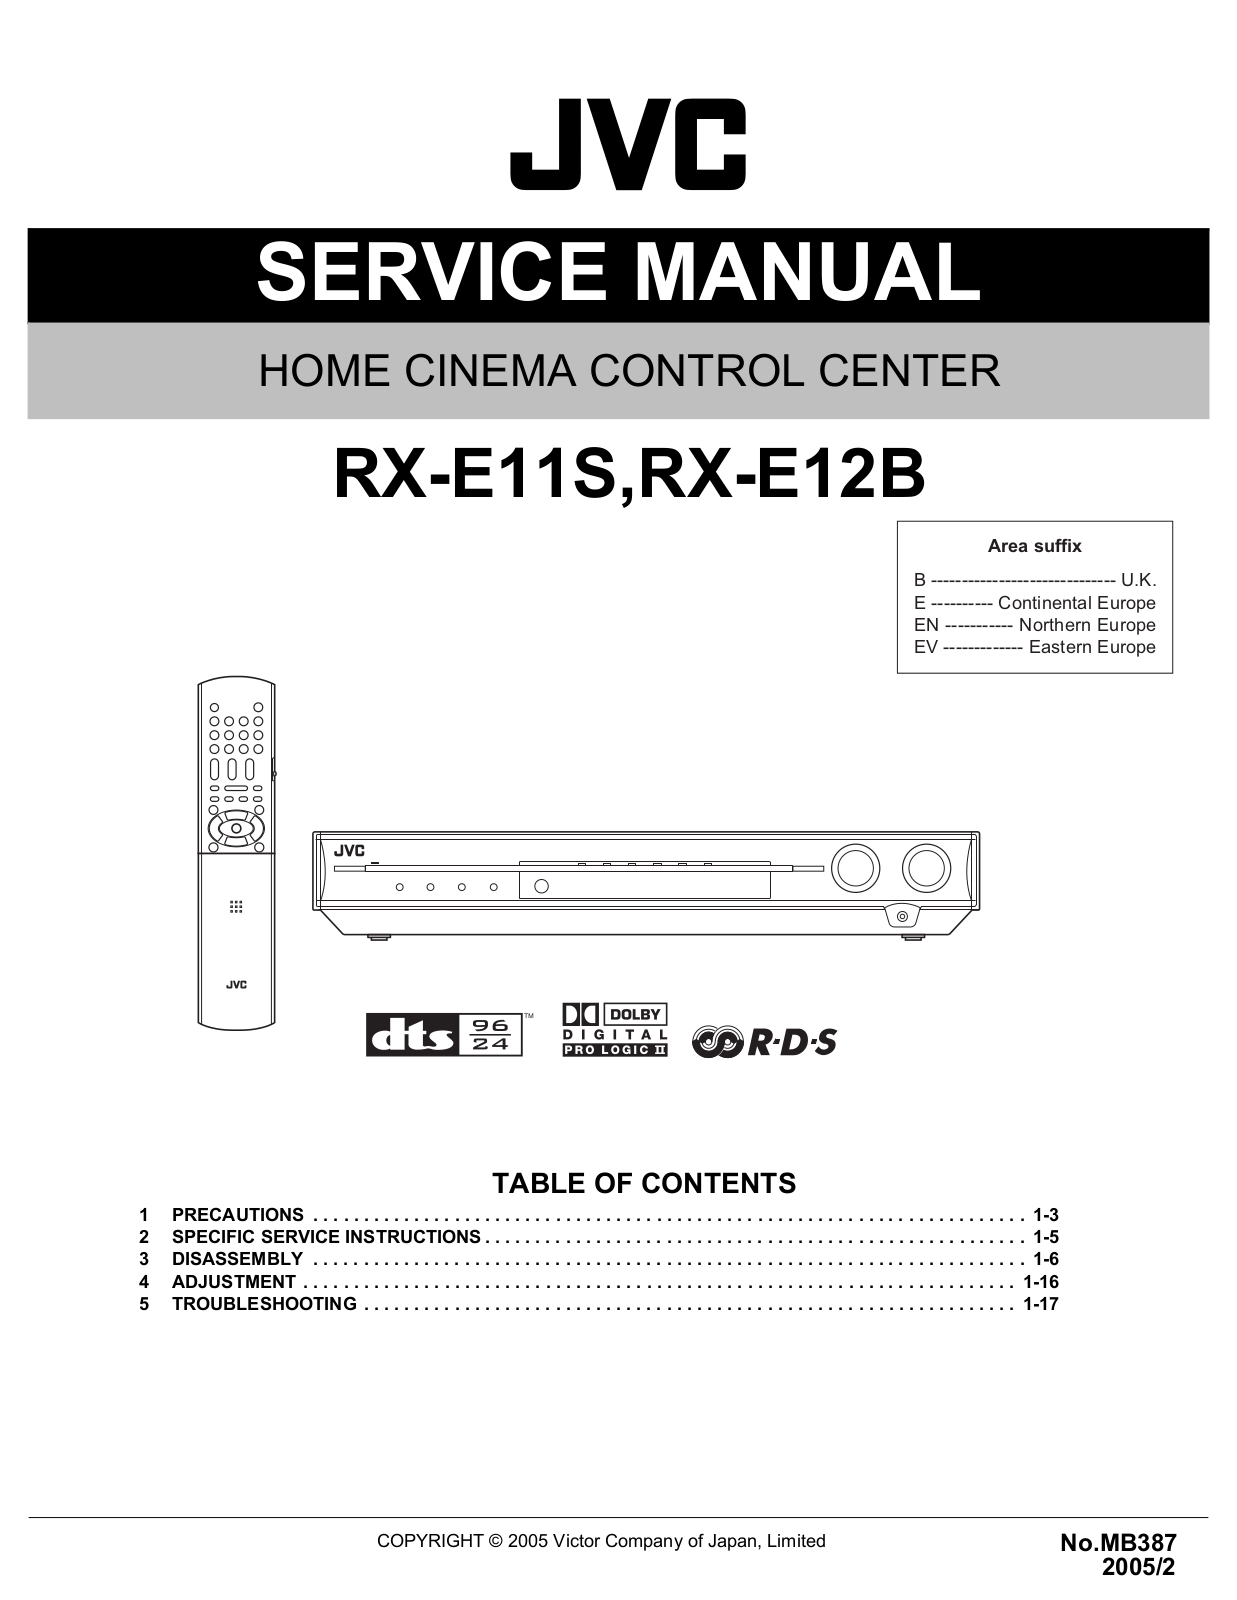 Jvc RX-E12-B, RX-E11-S Service Manual